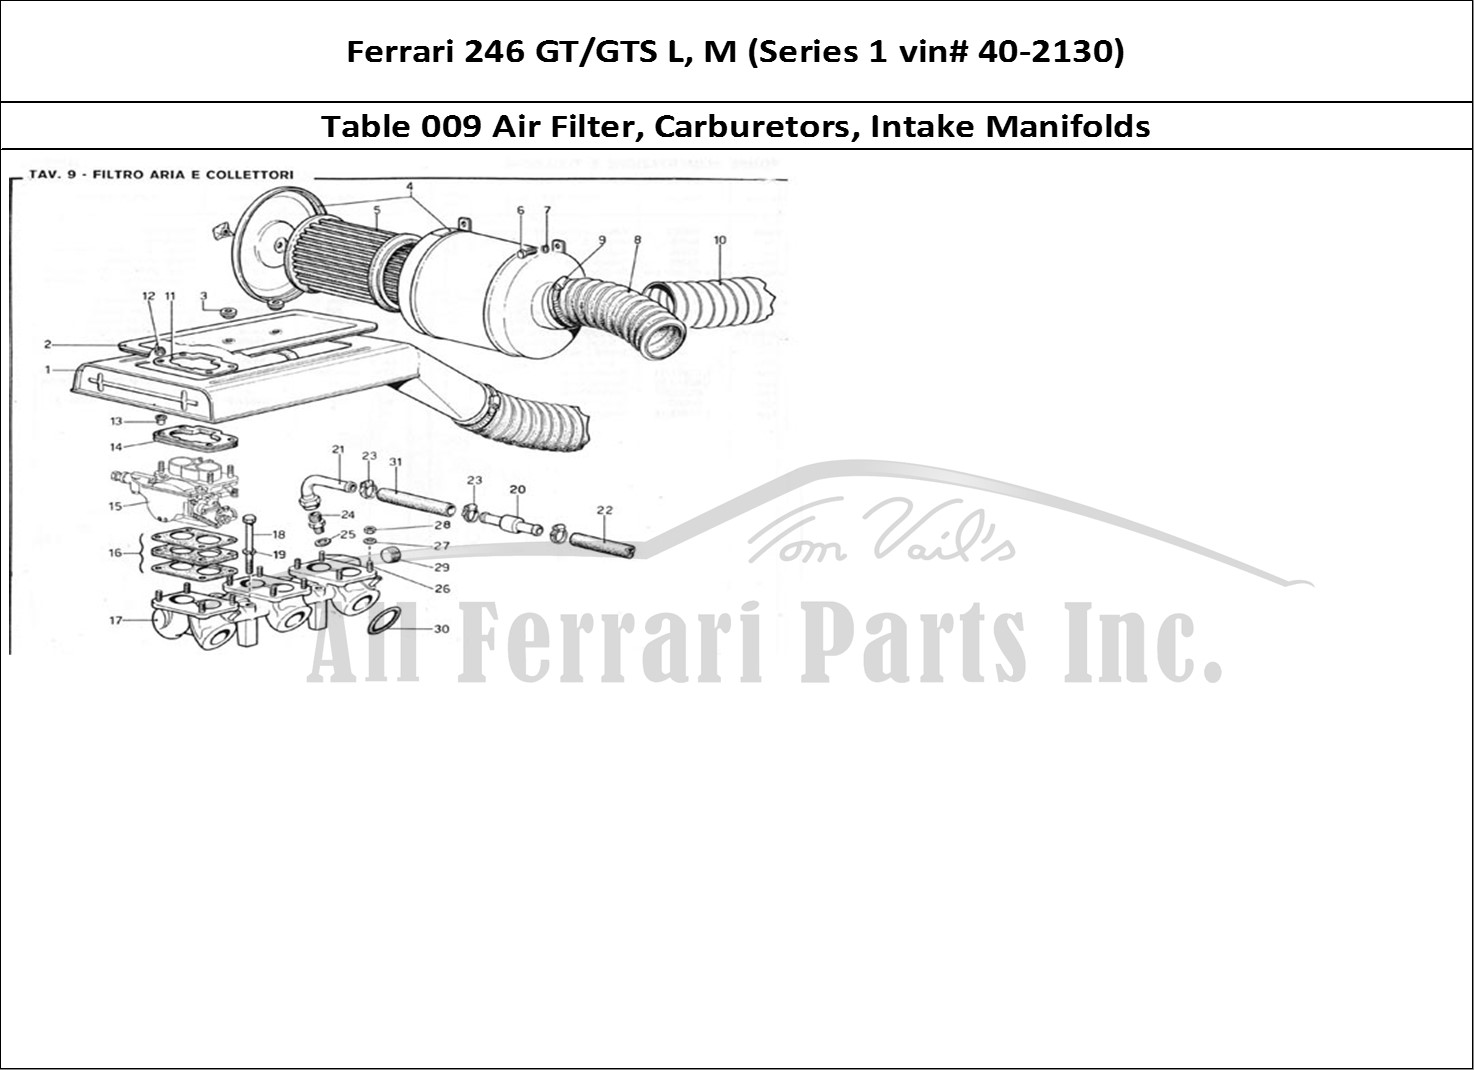 Ferrari Parts Ferrari 246 GT Series 1 Page 009 Air Filter & Manifolds